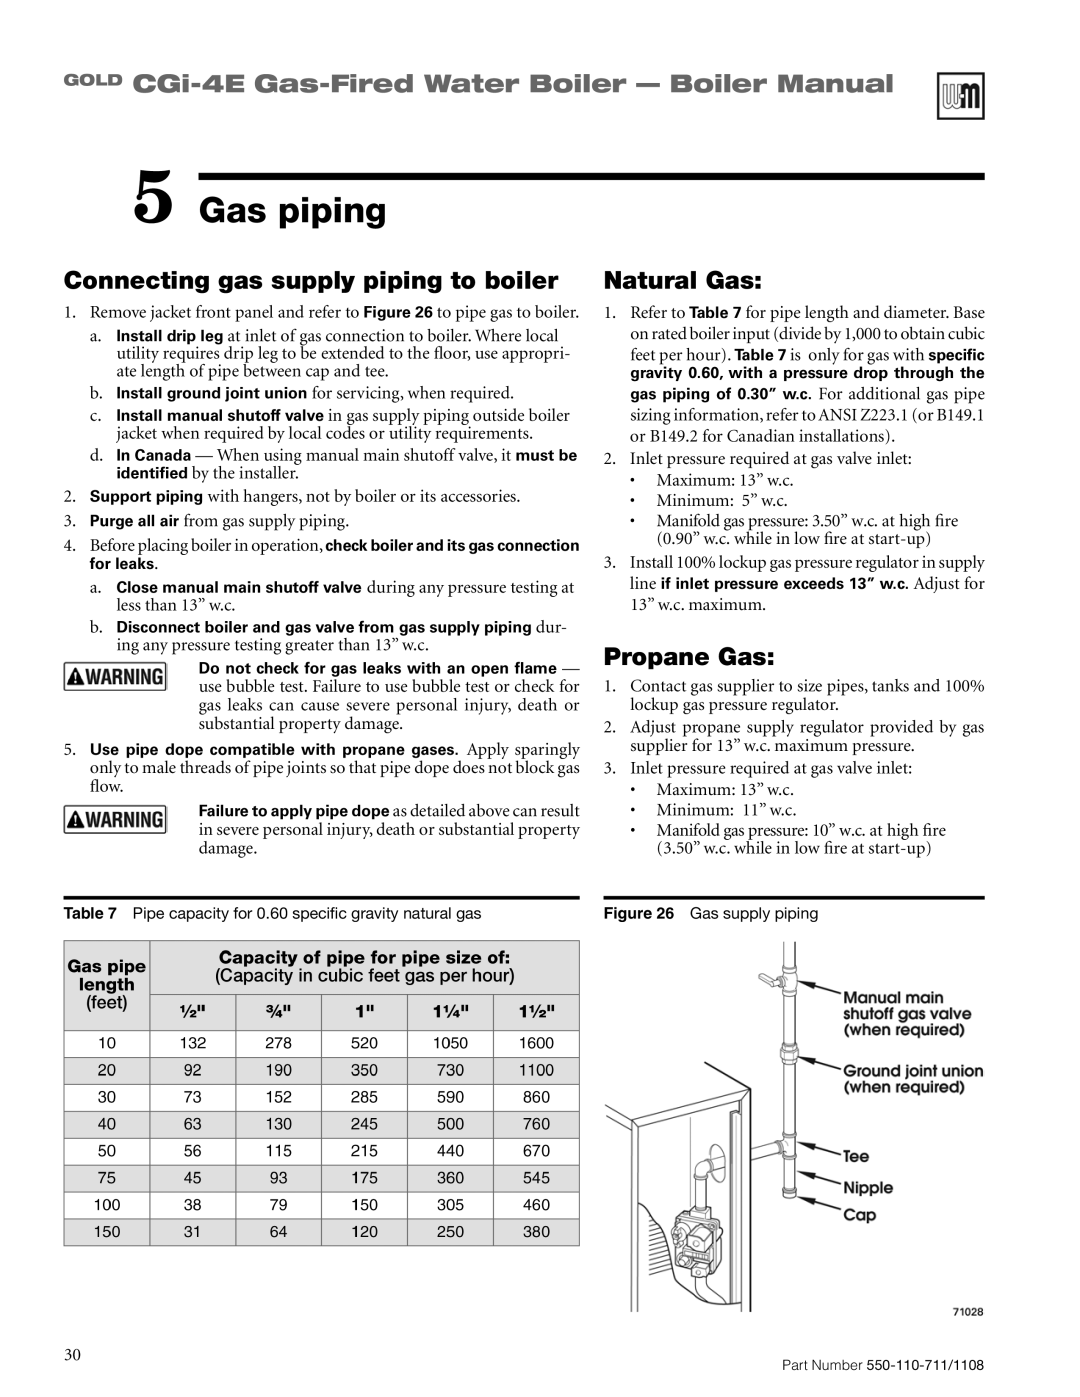 Weil-McLain CGI-4E Gas piping, GOLD CGi-4E Gas-FiredWater Boiler - Boiler Manual, Connecting gas supply piping to boiler 